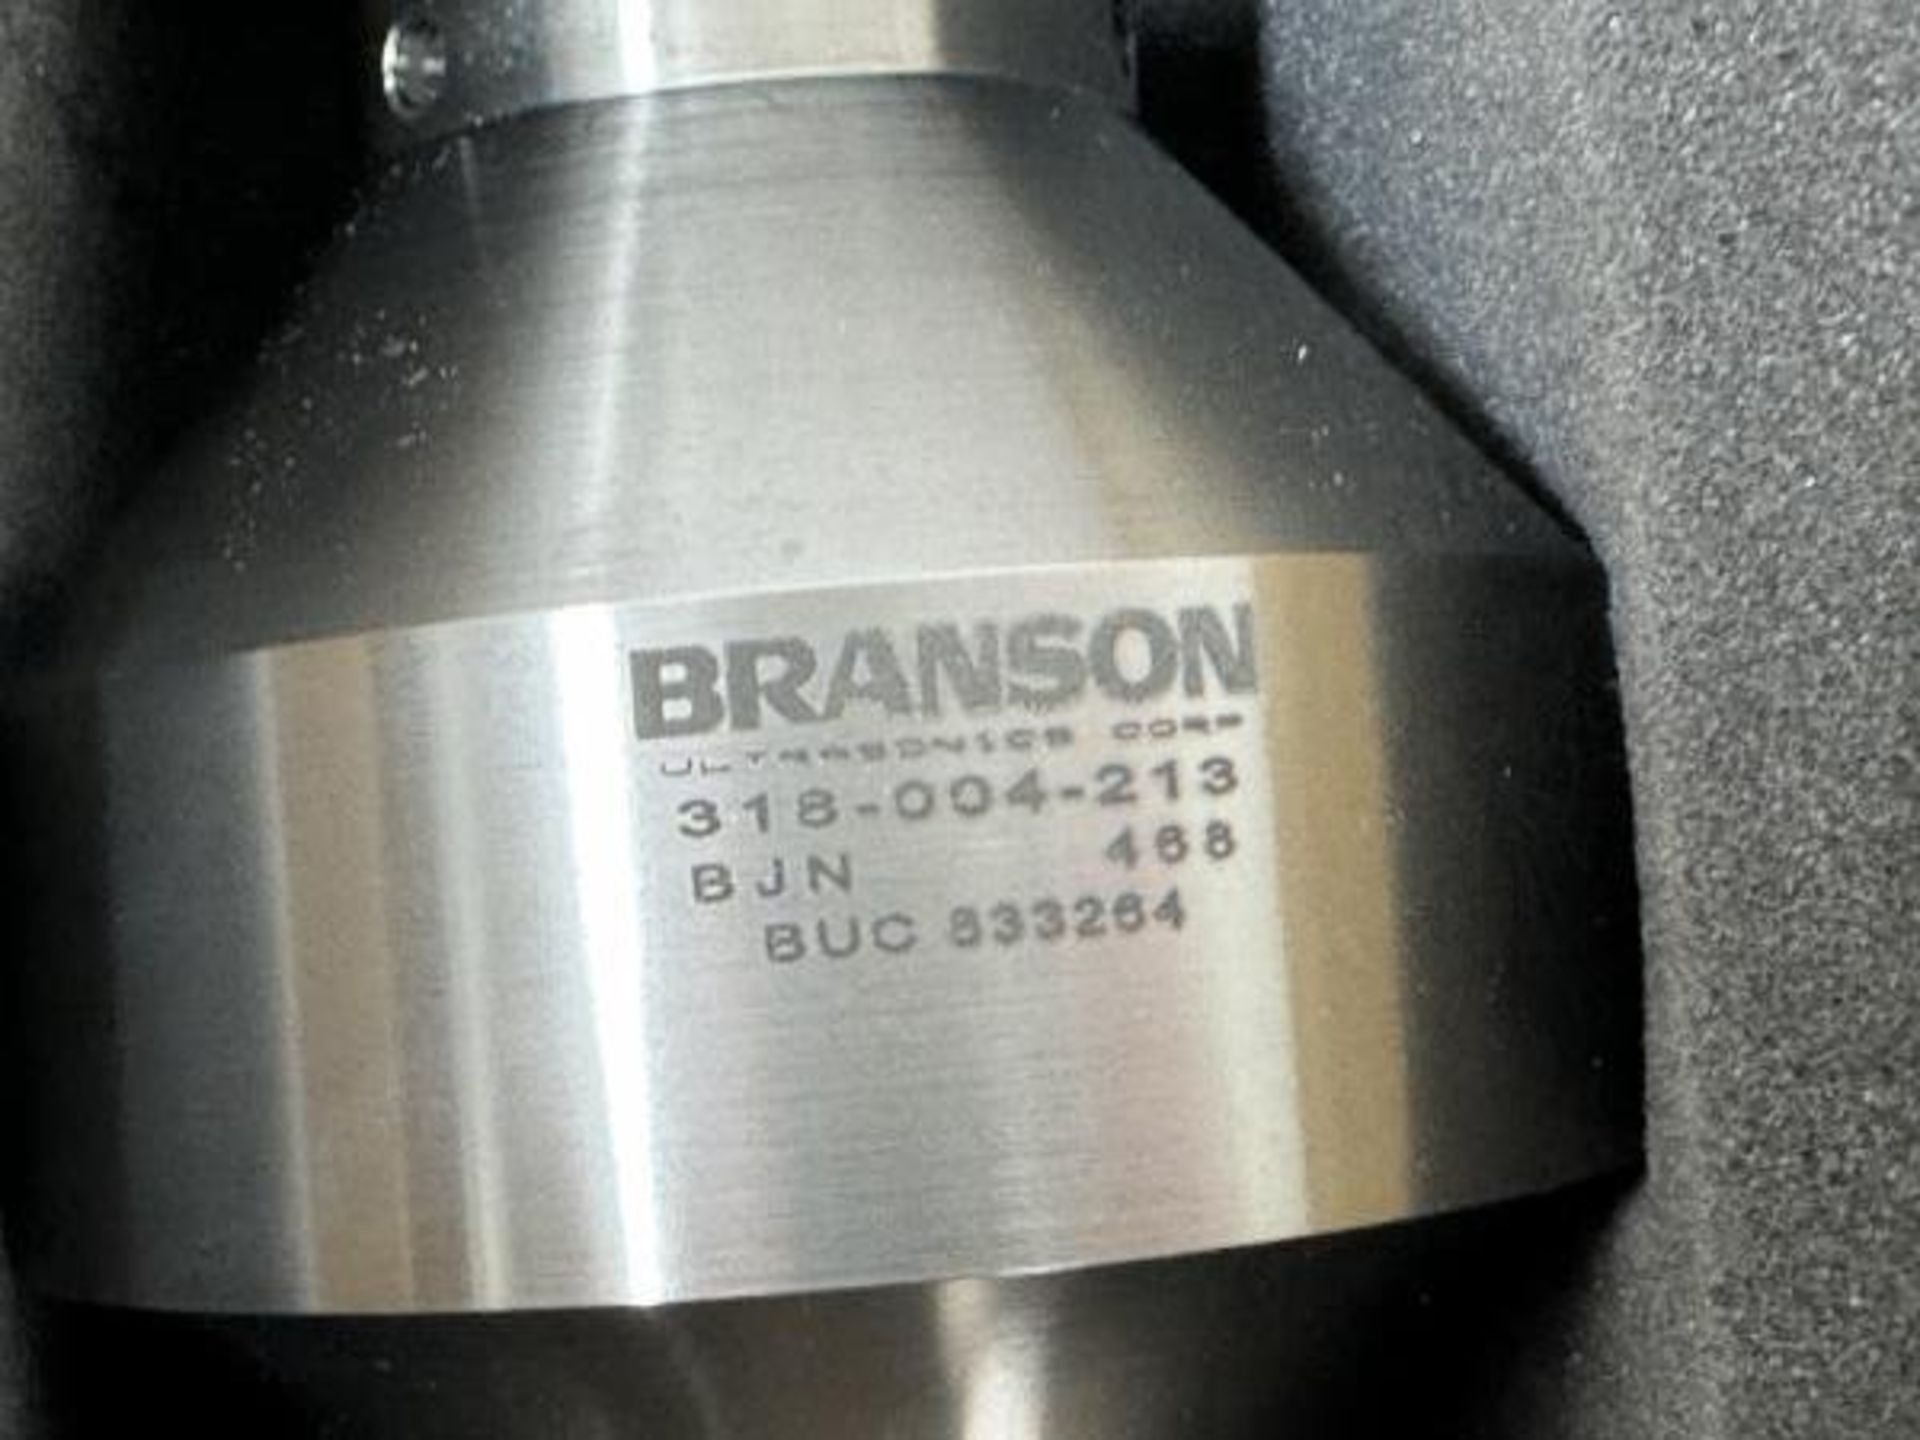 Branson Part: 318-004-213, BJN 466 BUC 833264 - Image 2 of 4